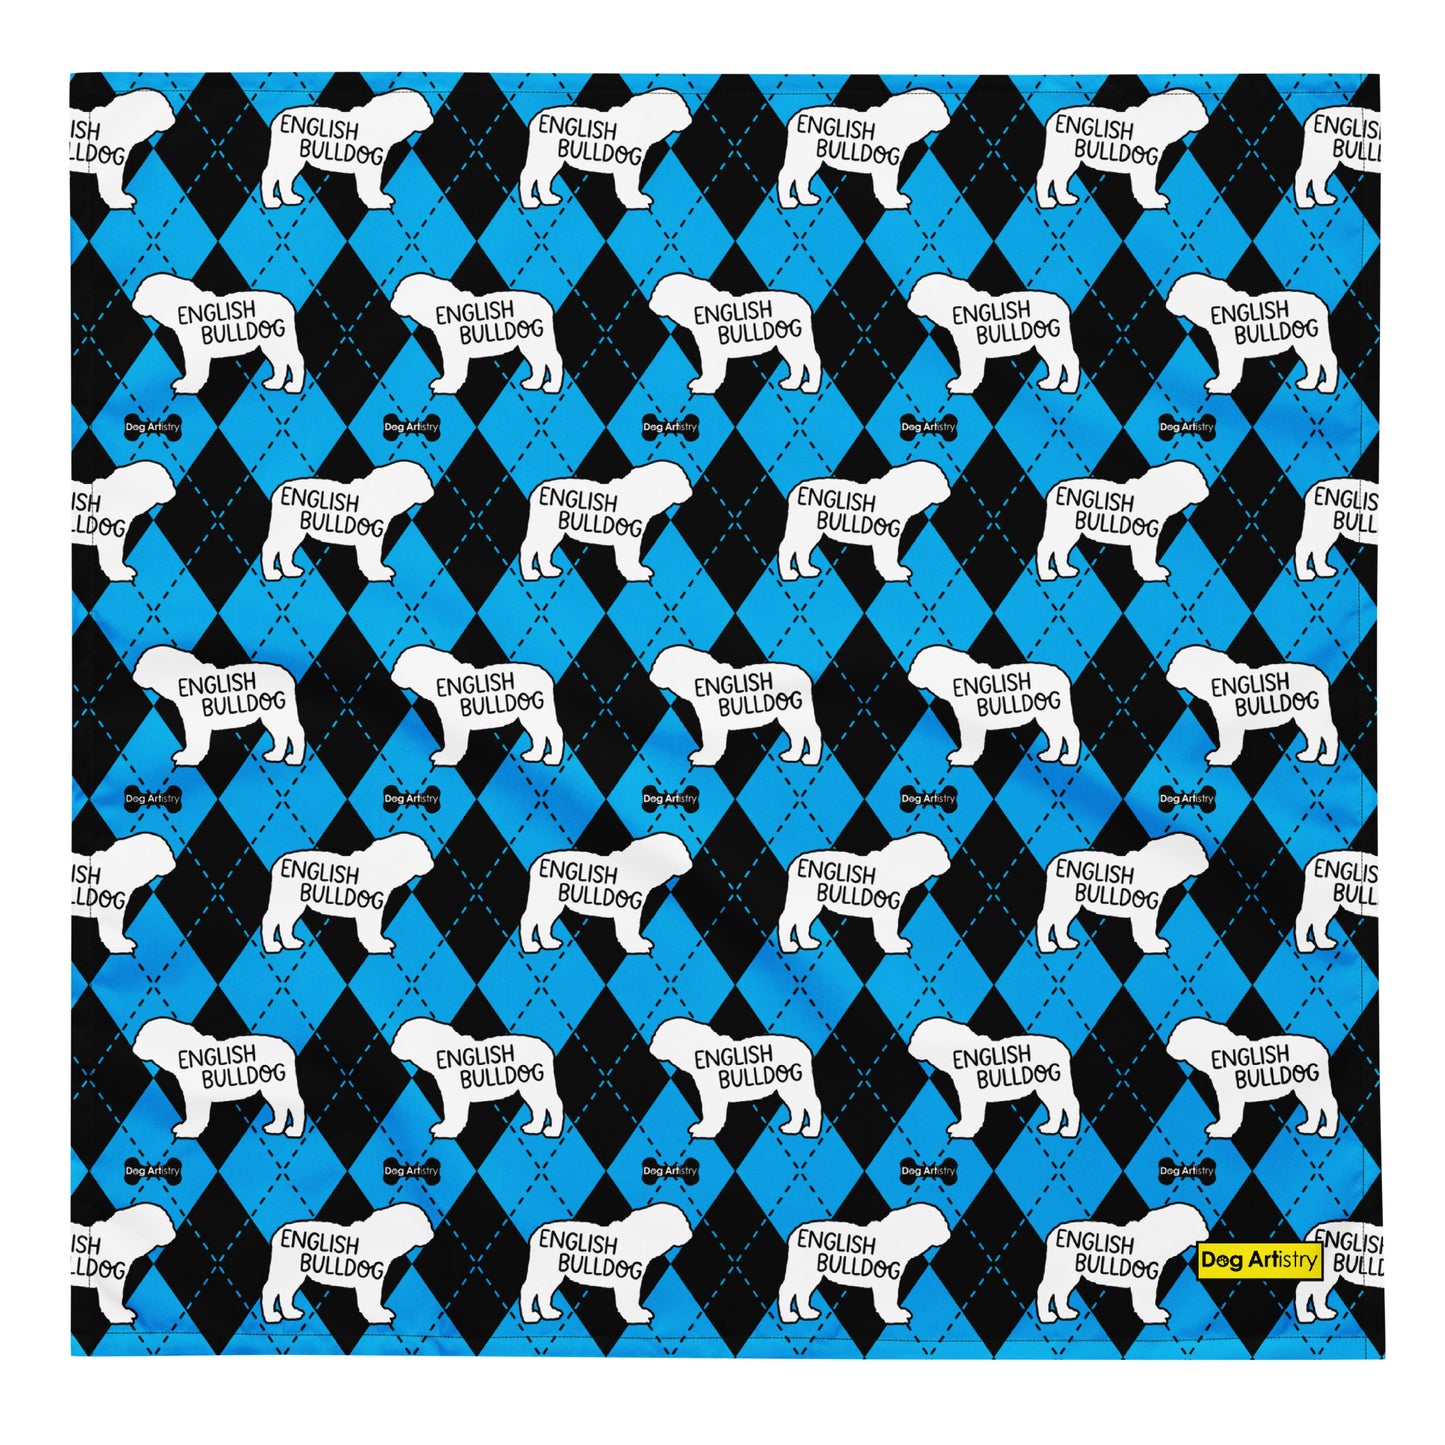 English Bulldog Argyle Blue and Black All-over print bandana